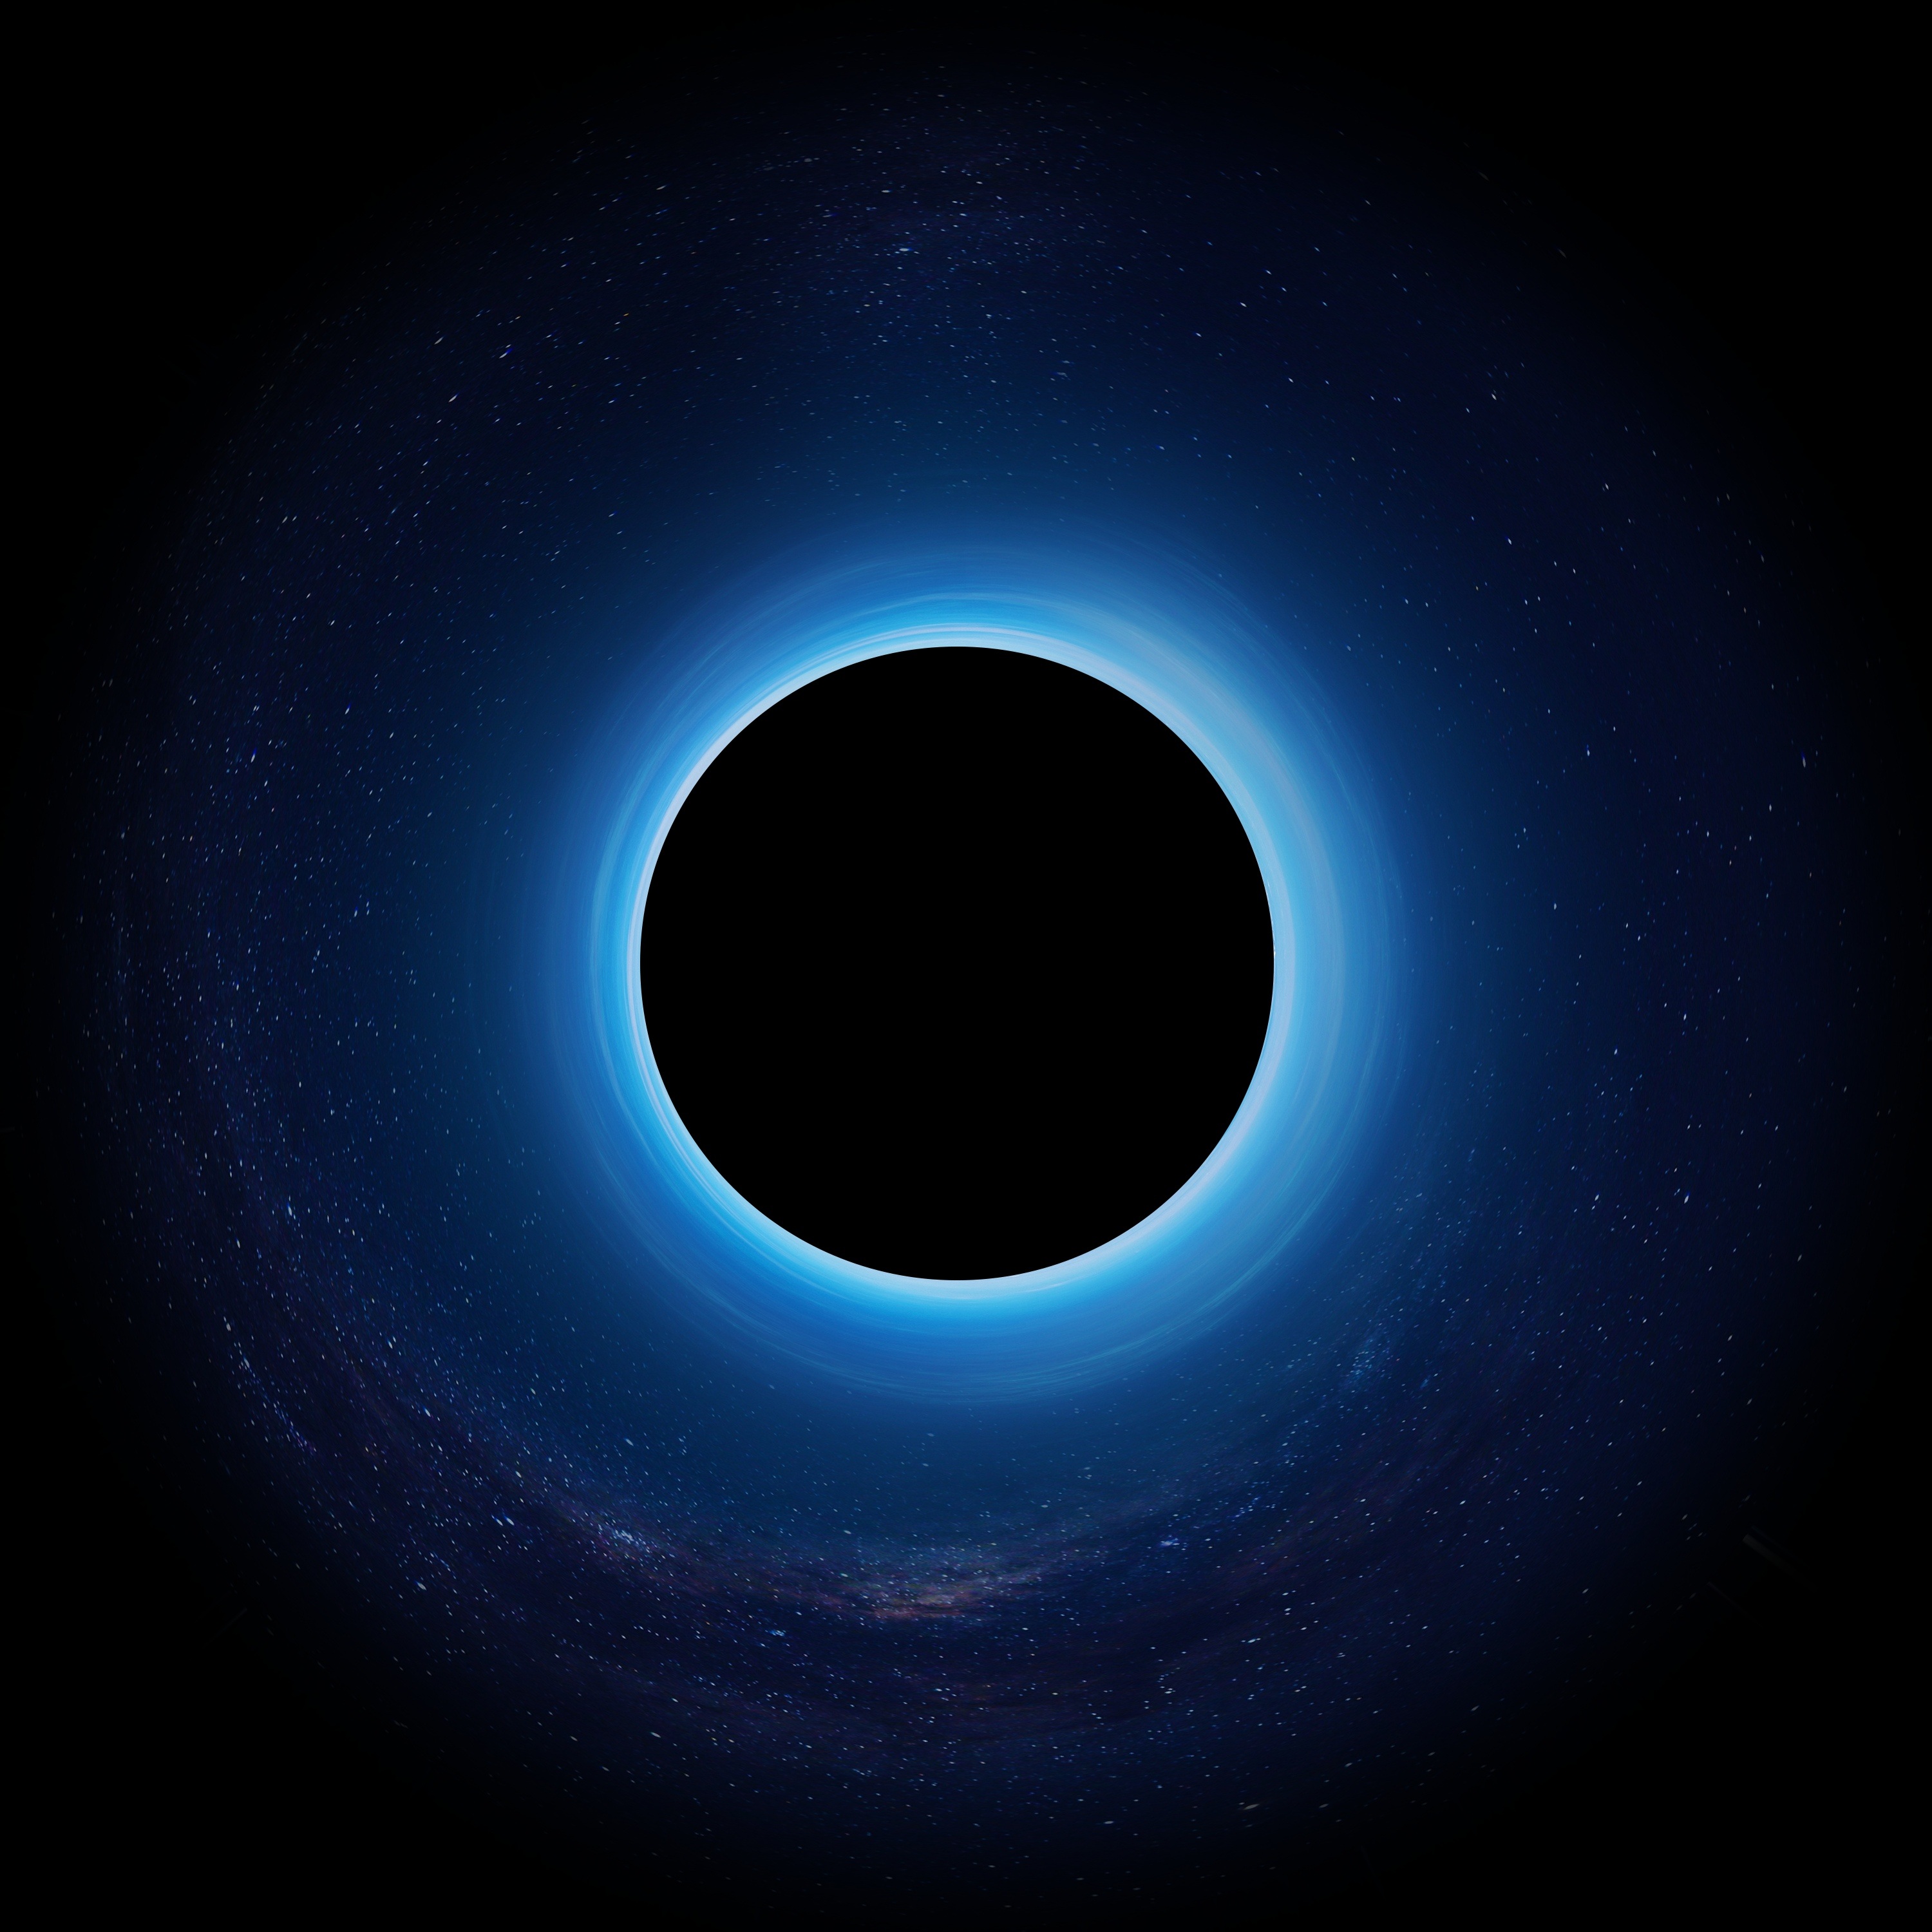 8k Black Hole Images